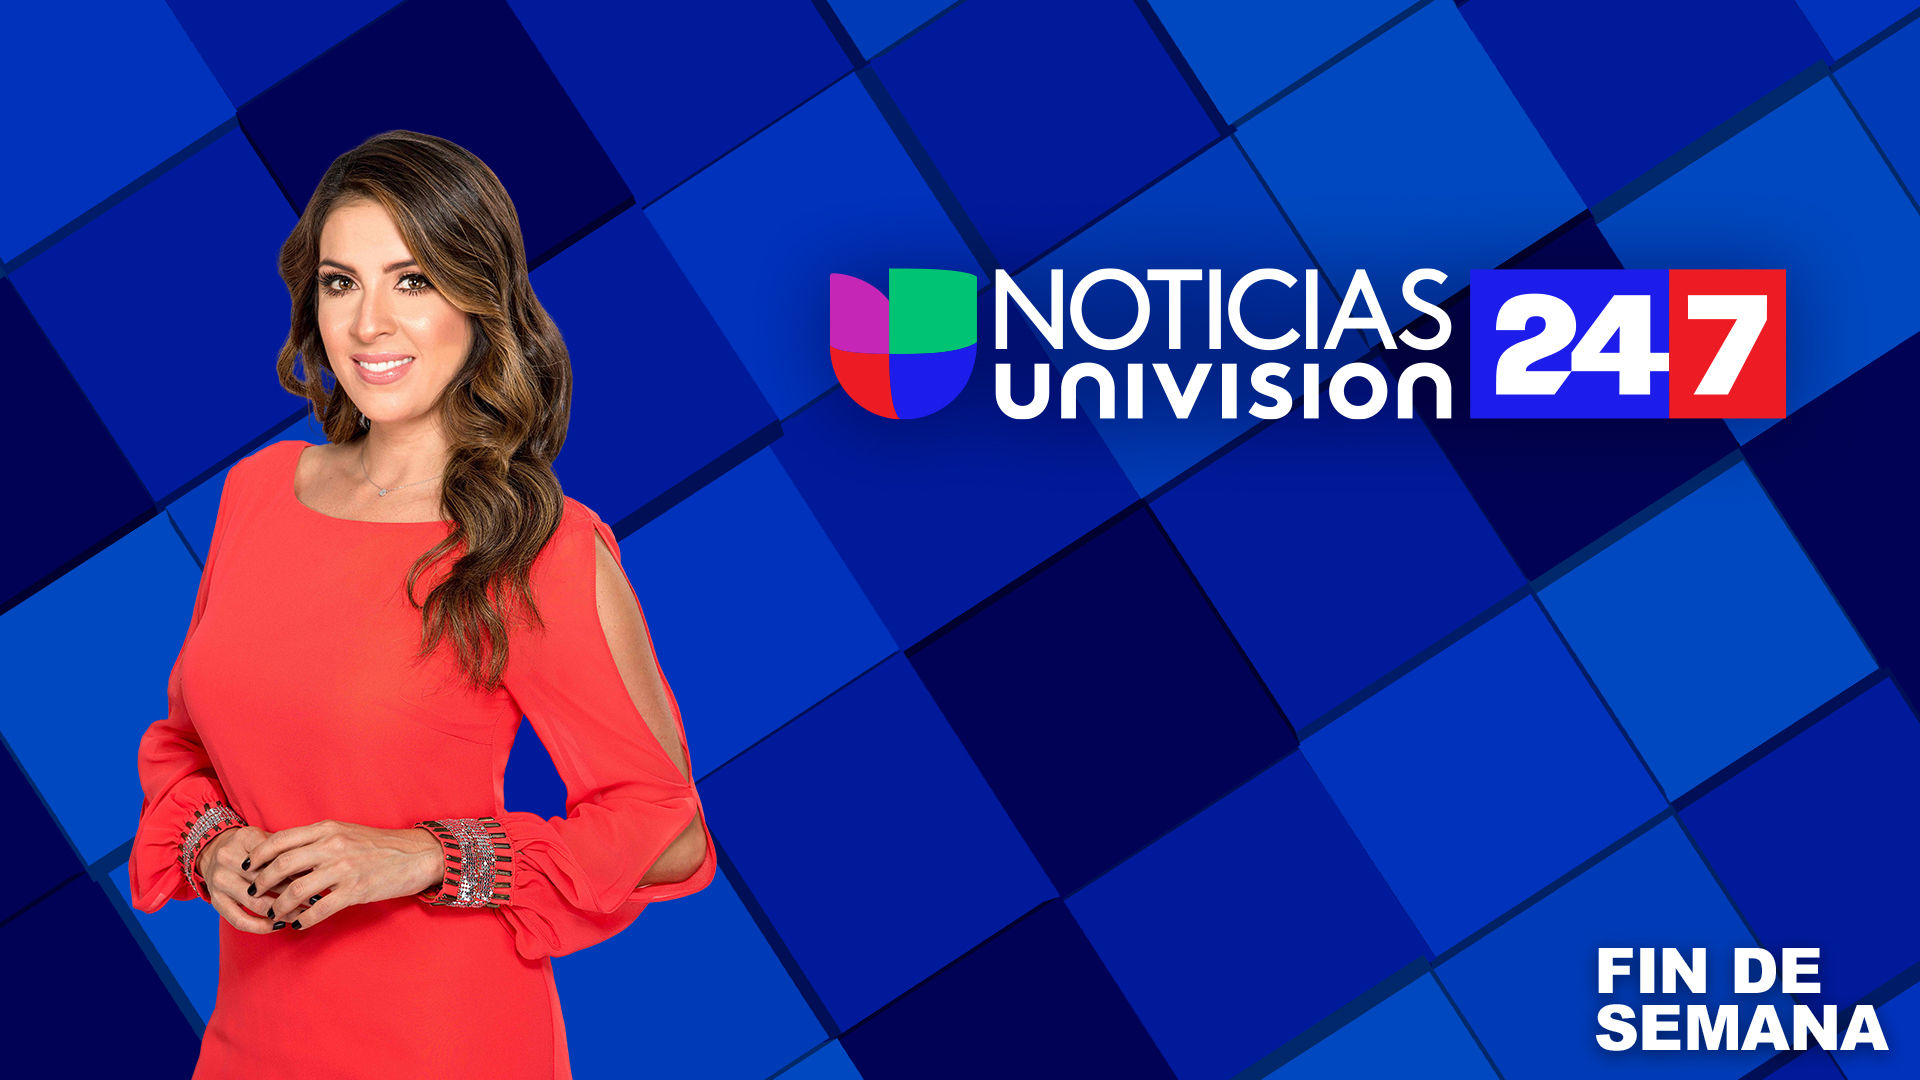 Ver Noticias Univision 24 7 Fin De Semana Por Vix 5956